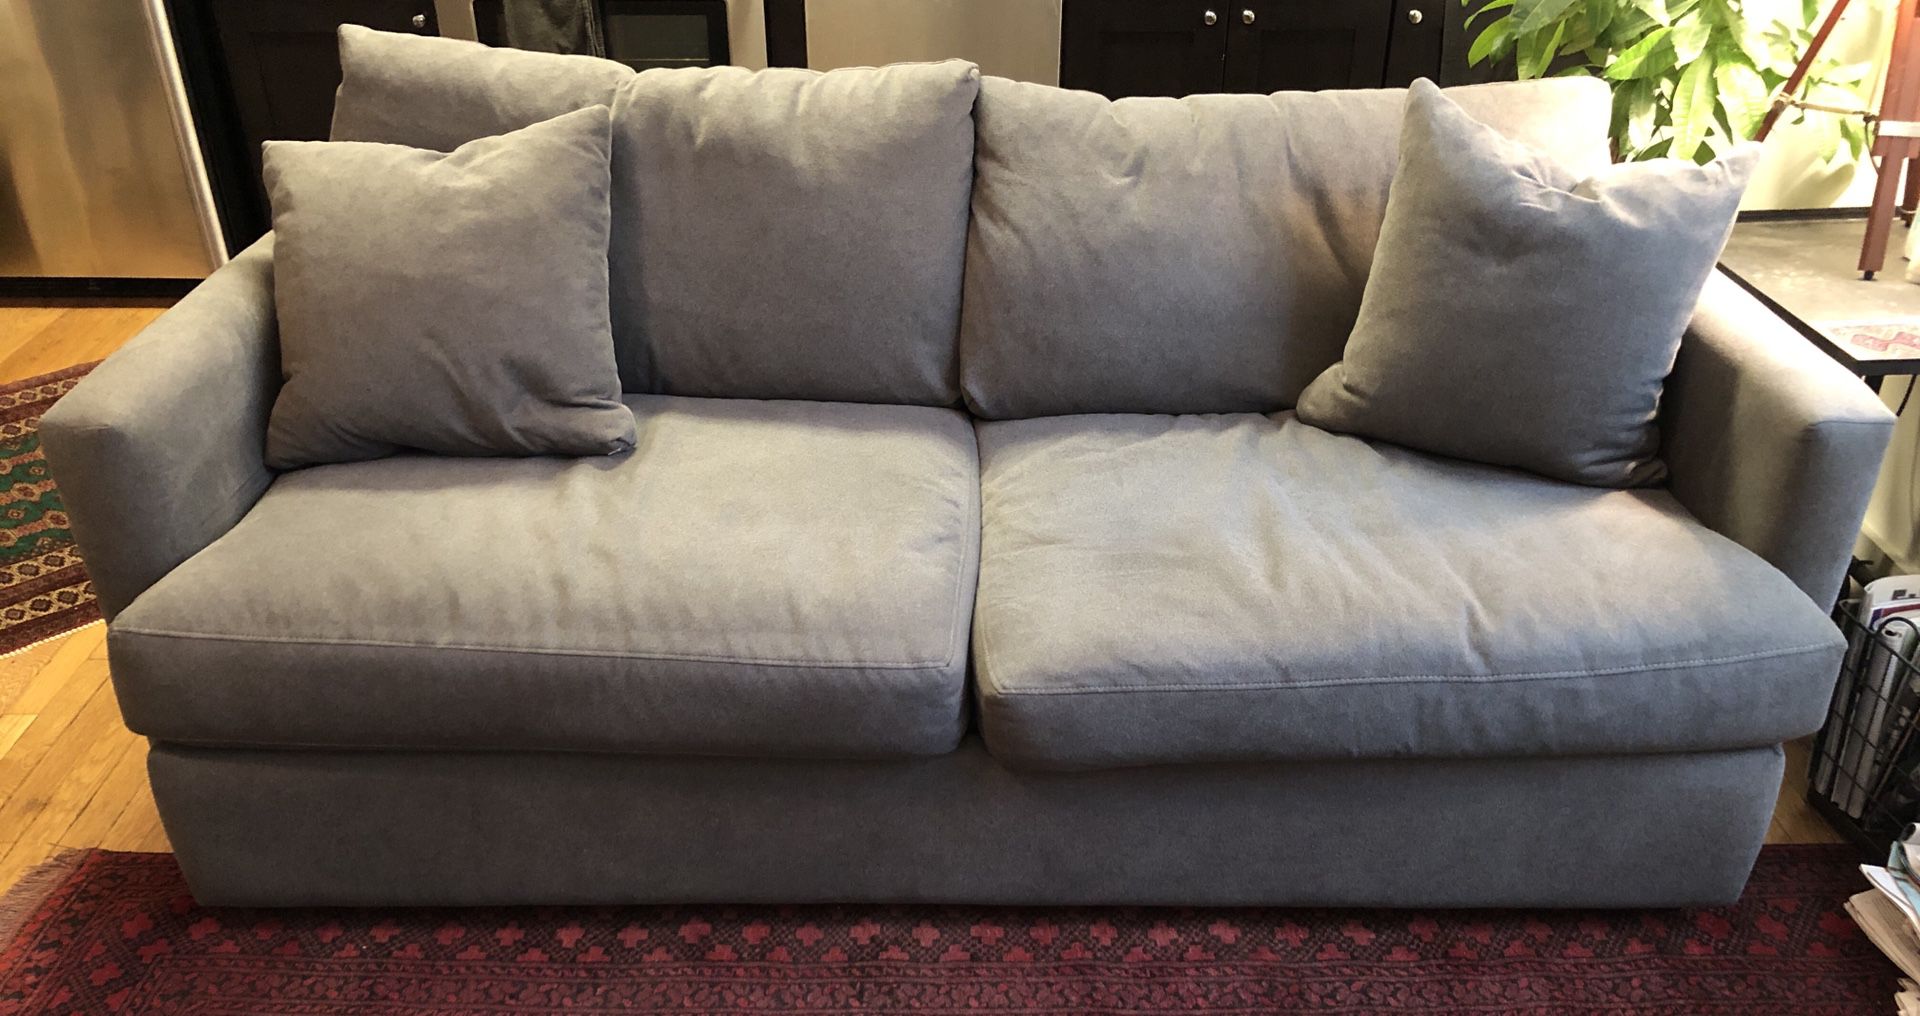 Wayfair Madison lounge sofa is Capri Dove gray